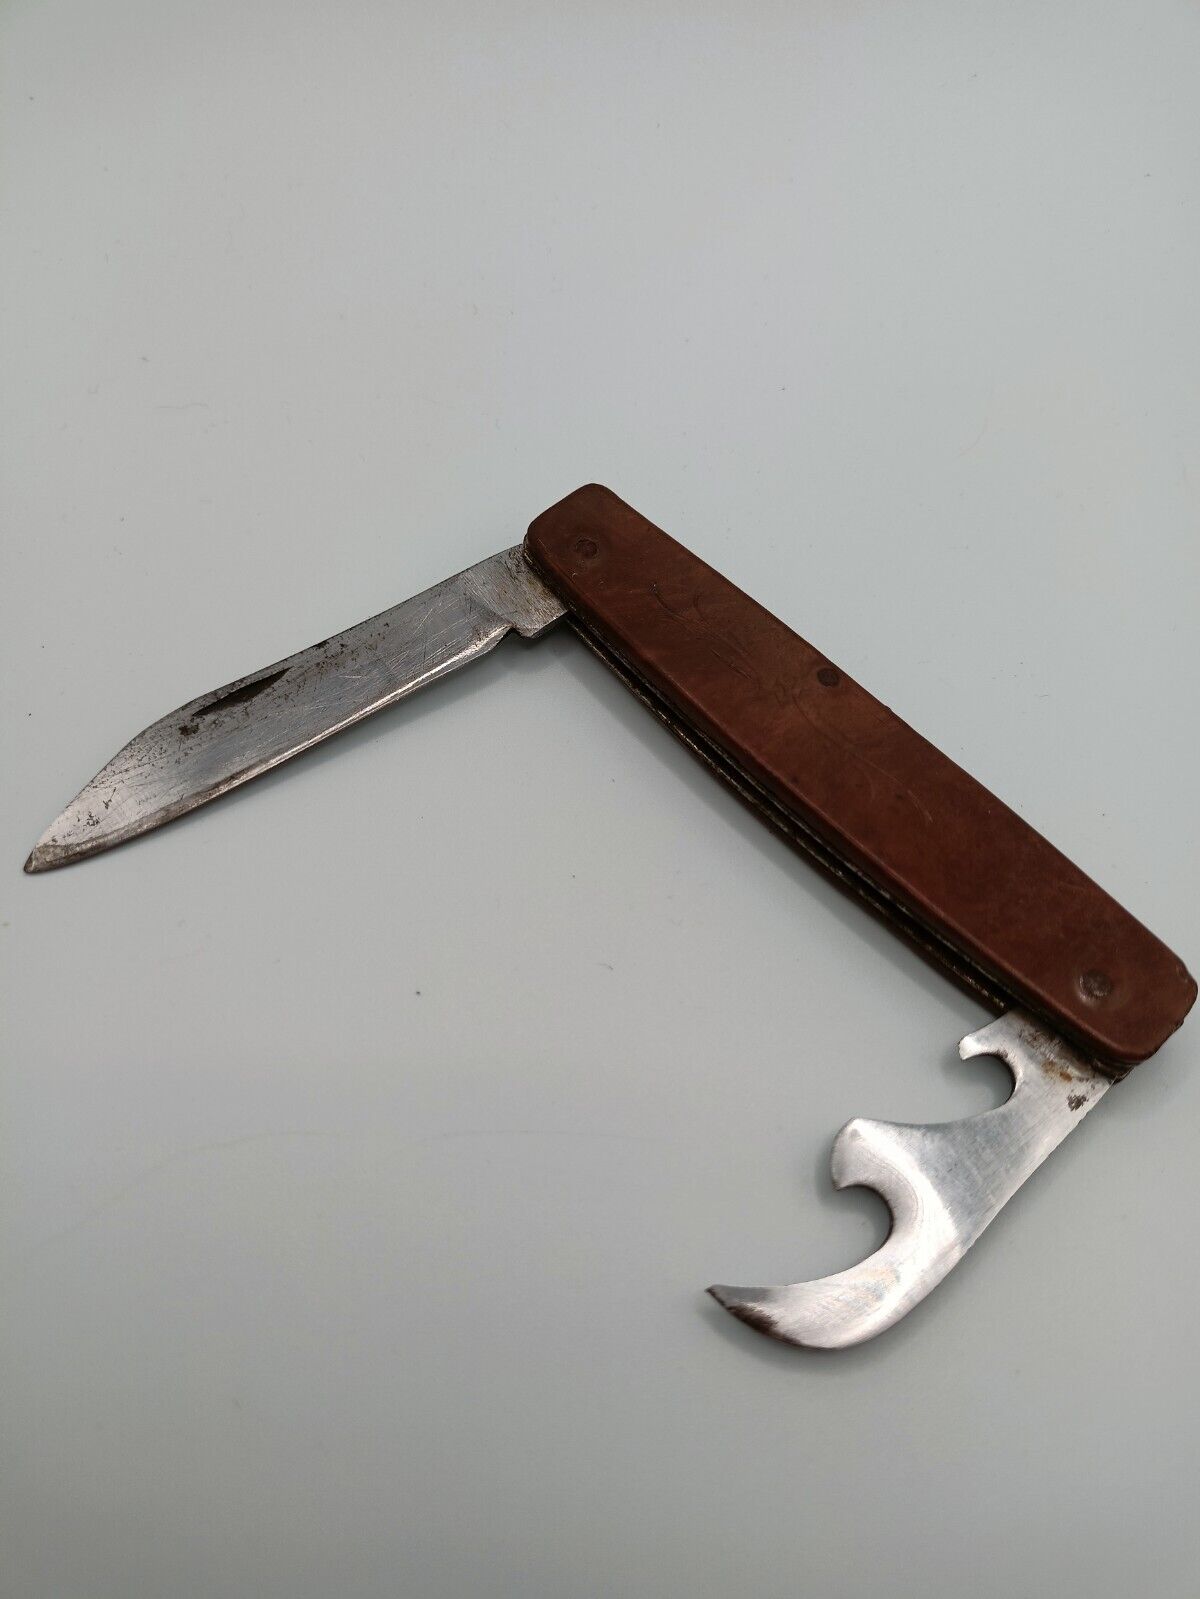 Vintage Soviet knife from the USSR era